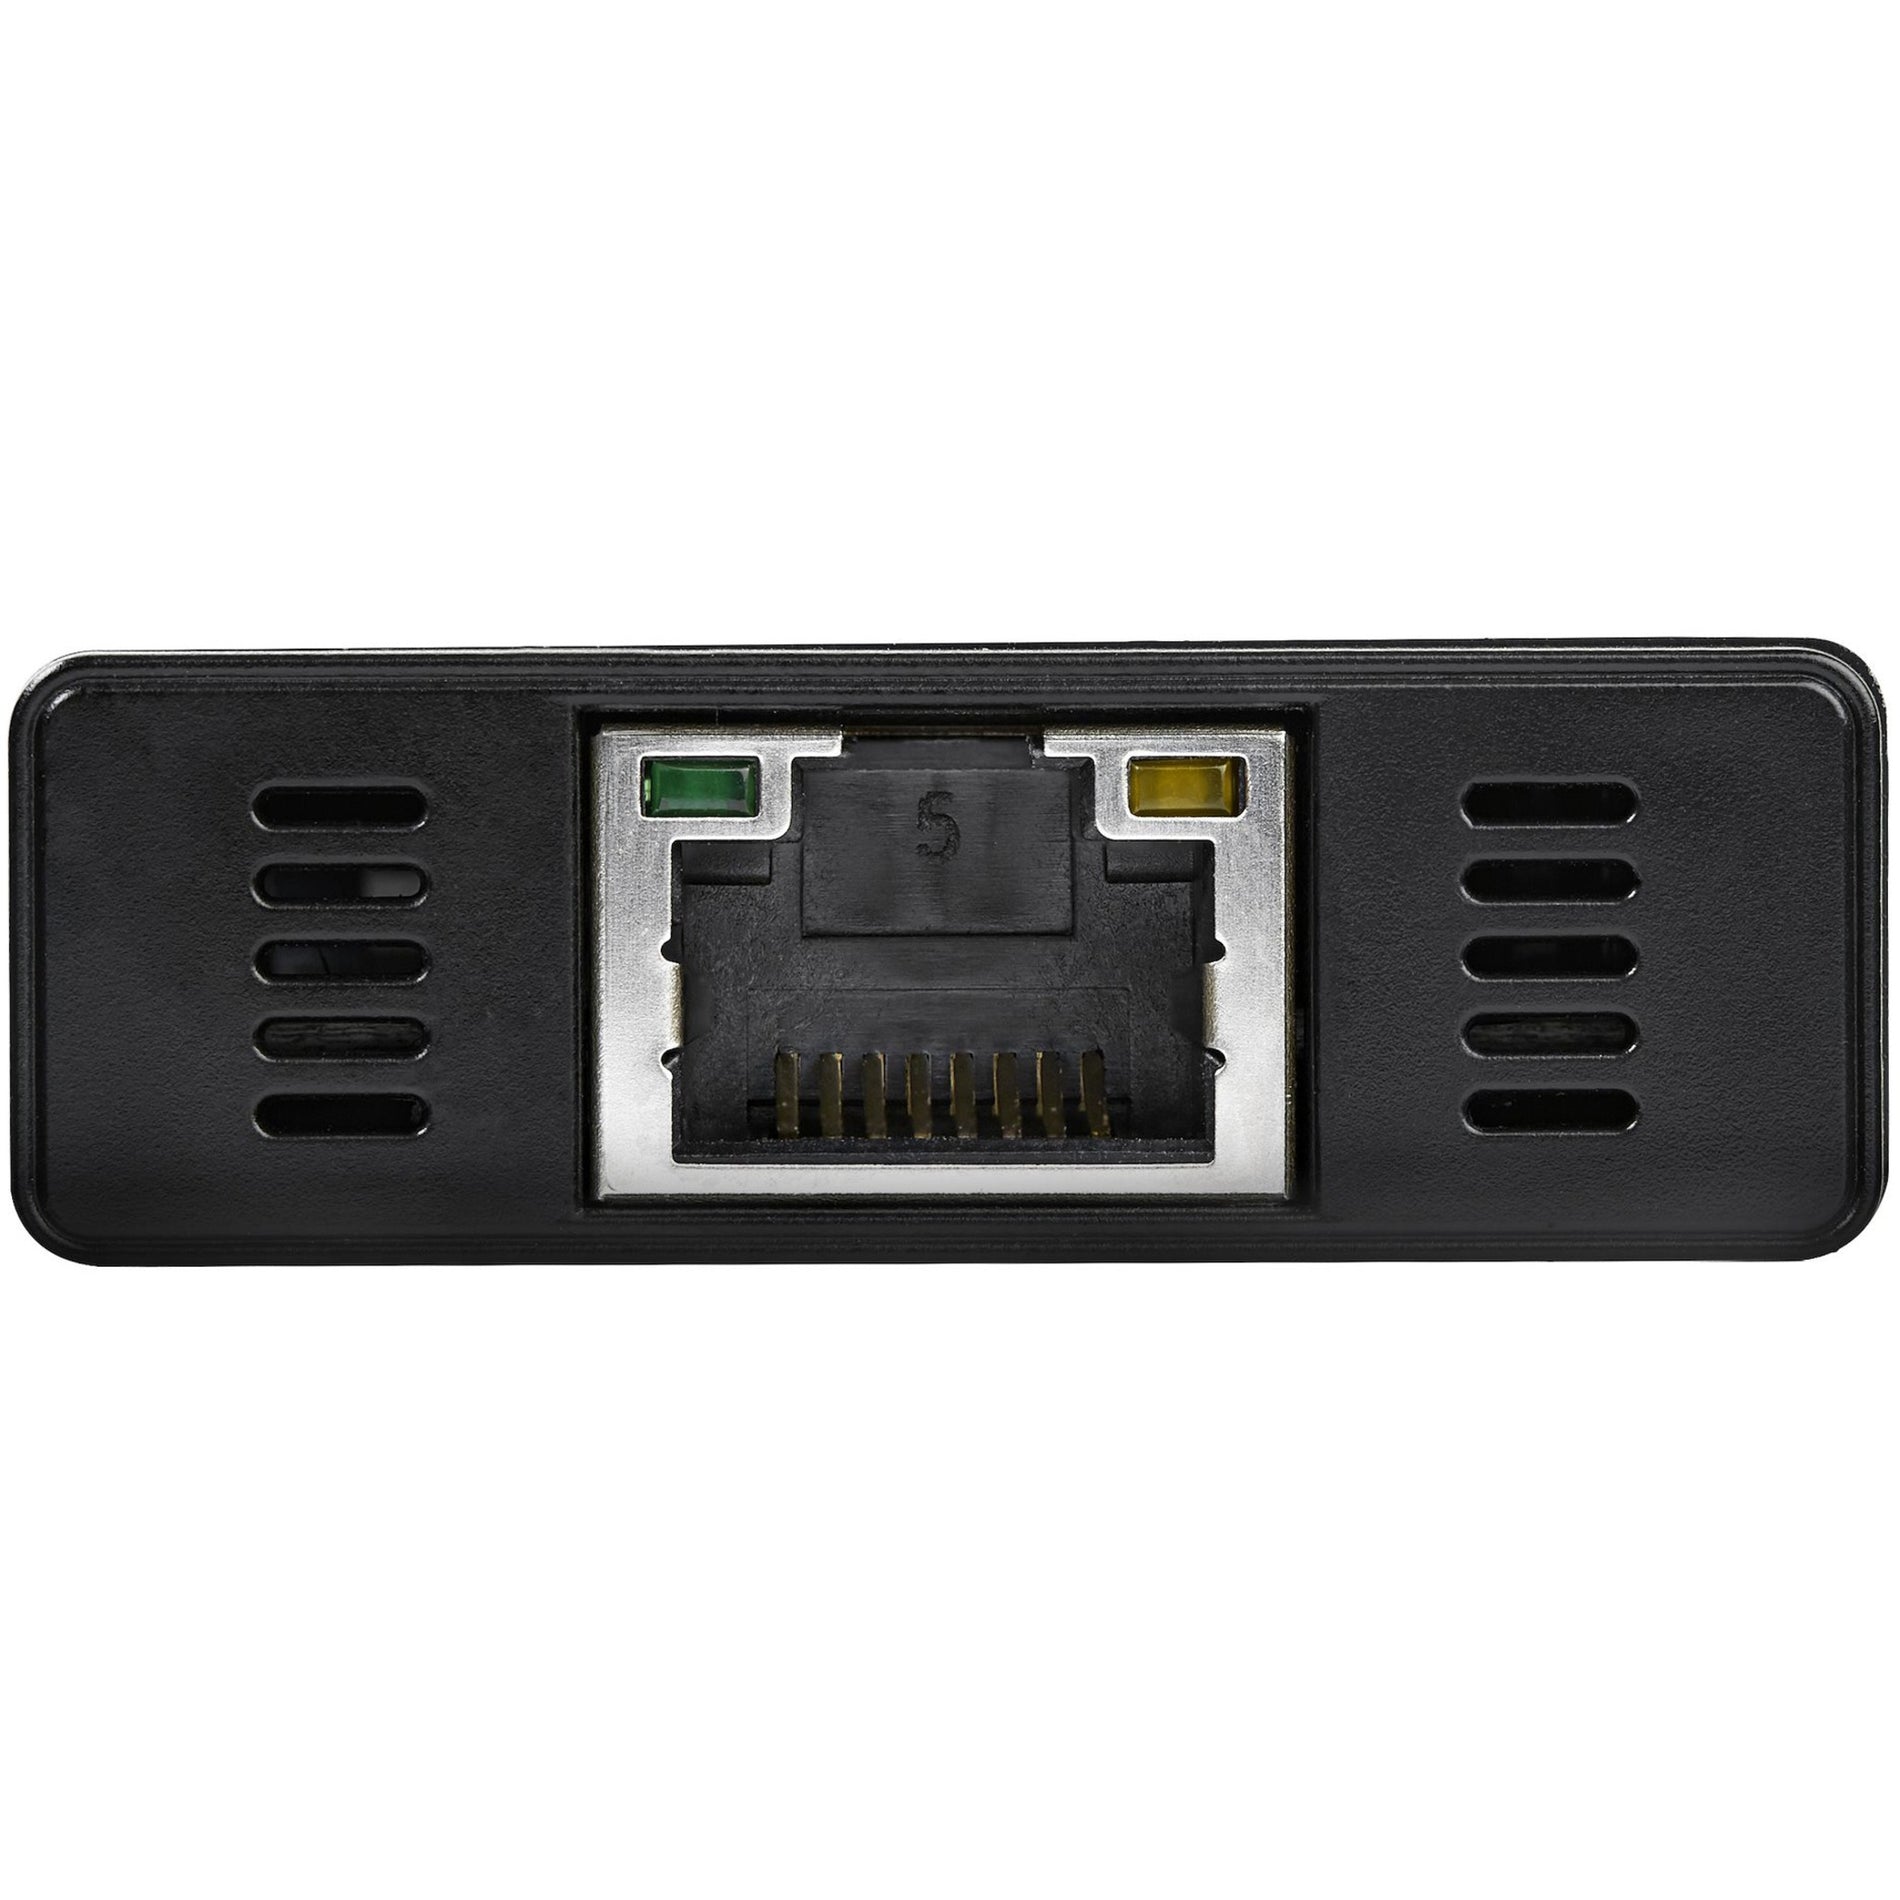 StarTech.com ST3300GU3B Aluminum USB 3.0 Hub with Gigabit Ethernet Adapter NIC, 3 Port Portable, Black